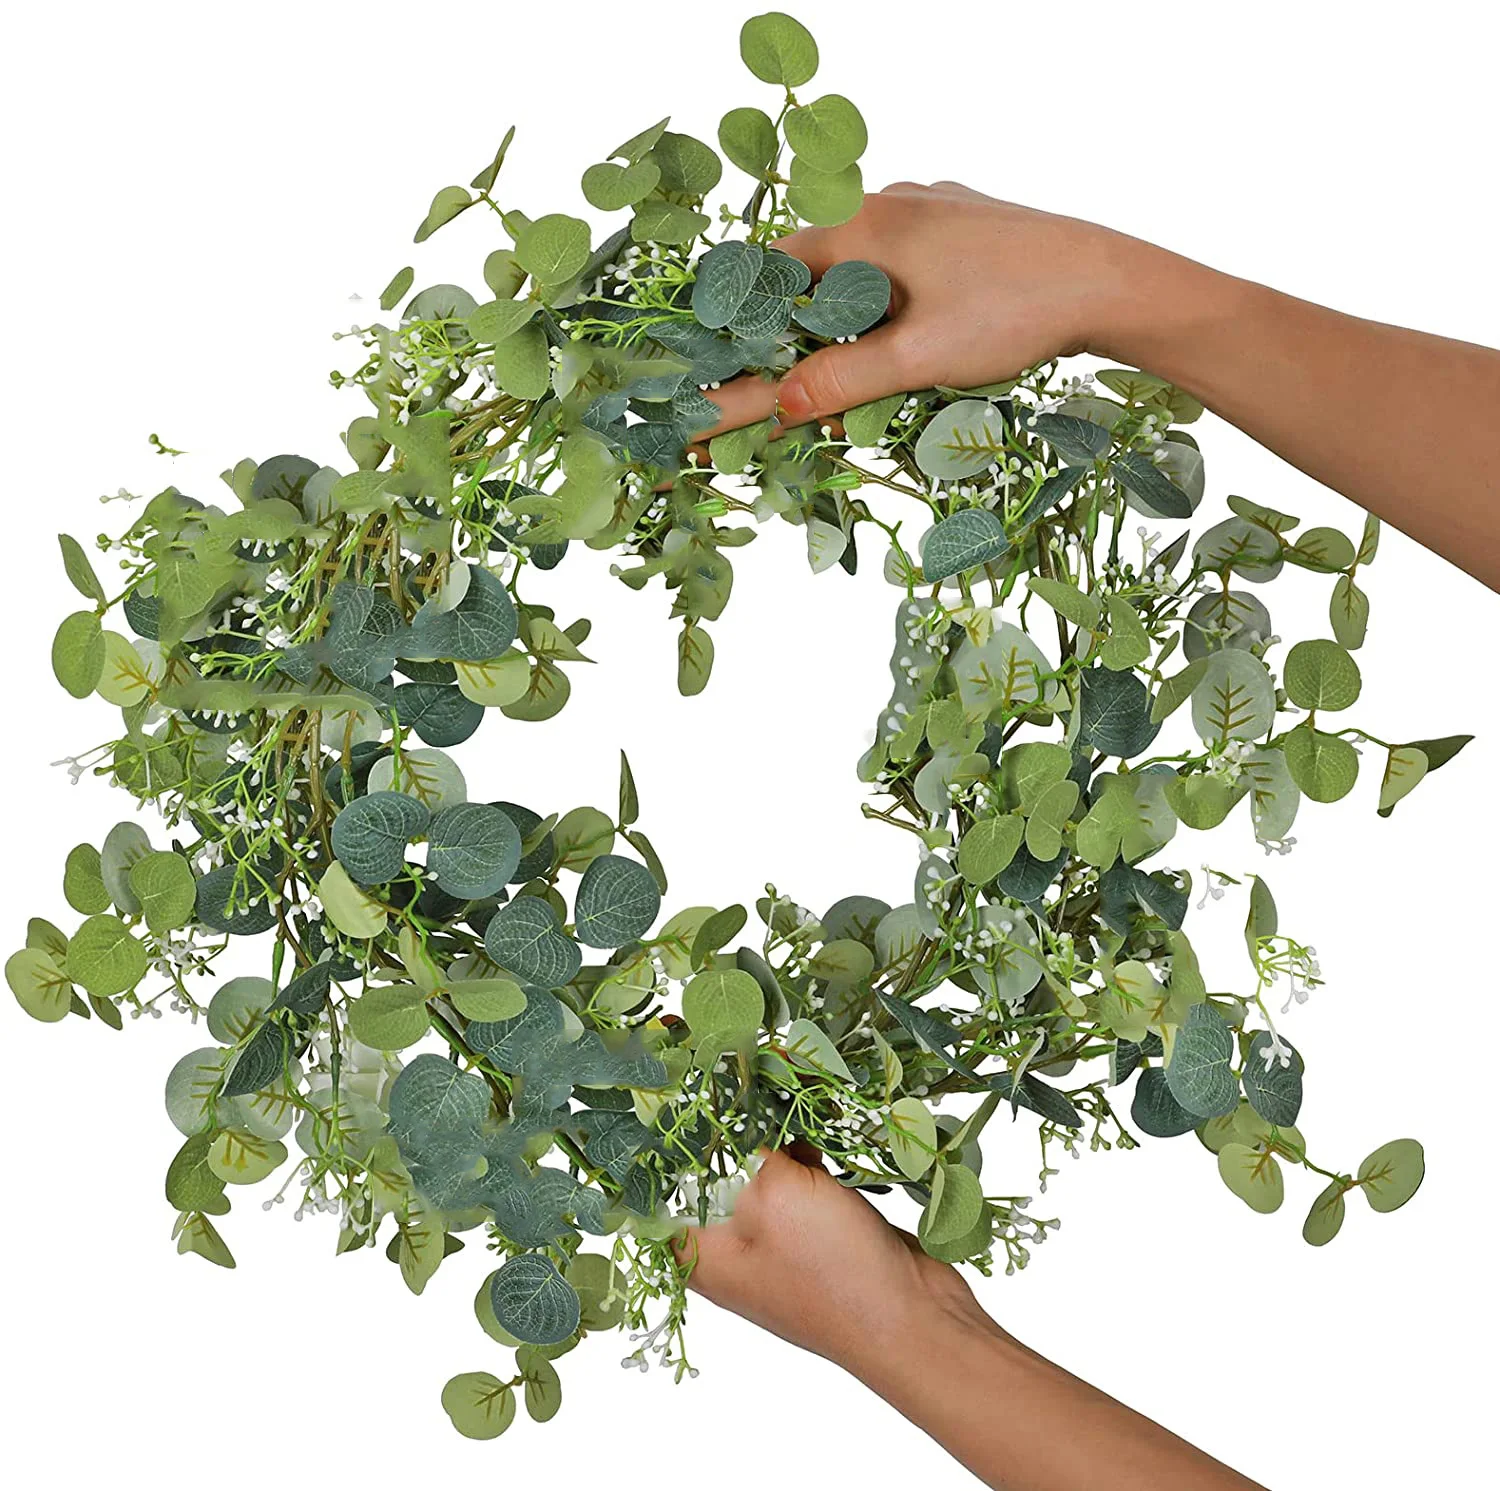 

200CM Artificial Eucalyptus Garland Silk Fake Ivy Vines Greenery Rattan Plants Wreath for Wall Room Garden Home Wedding Decor